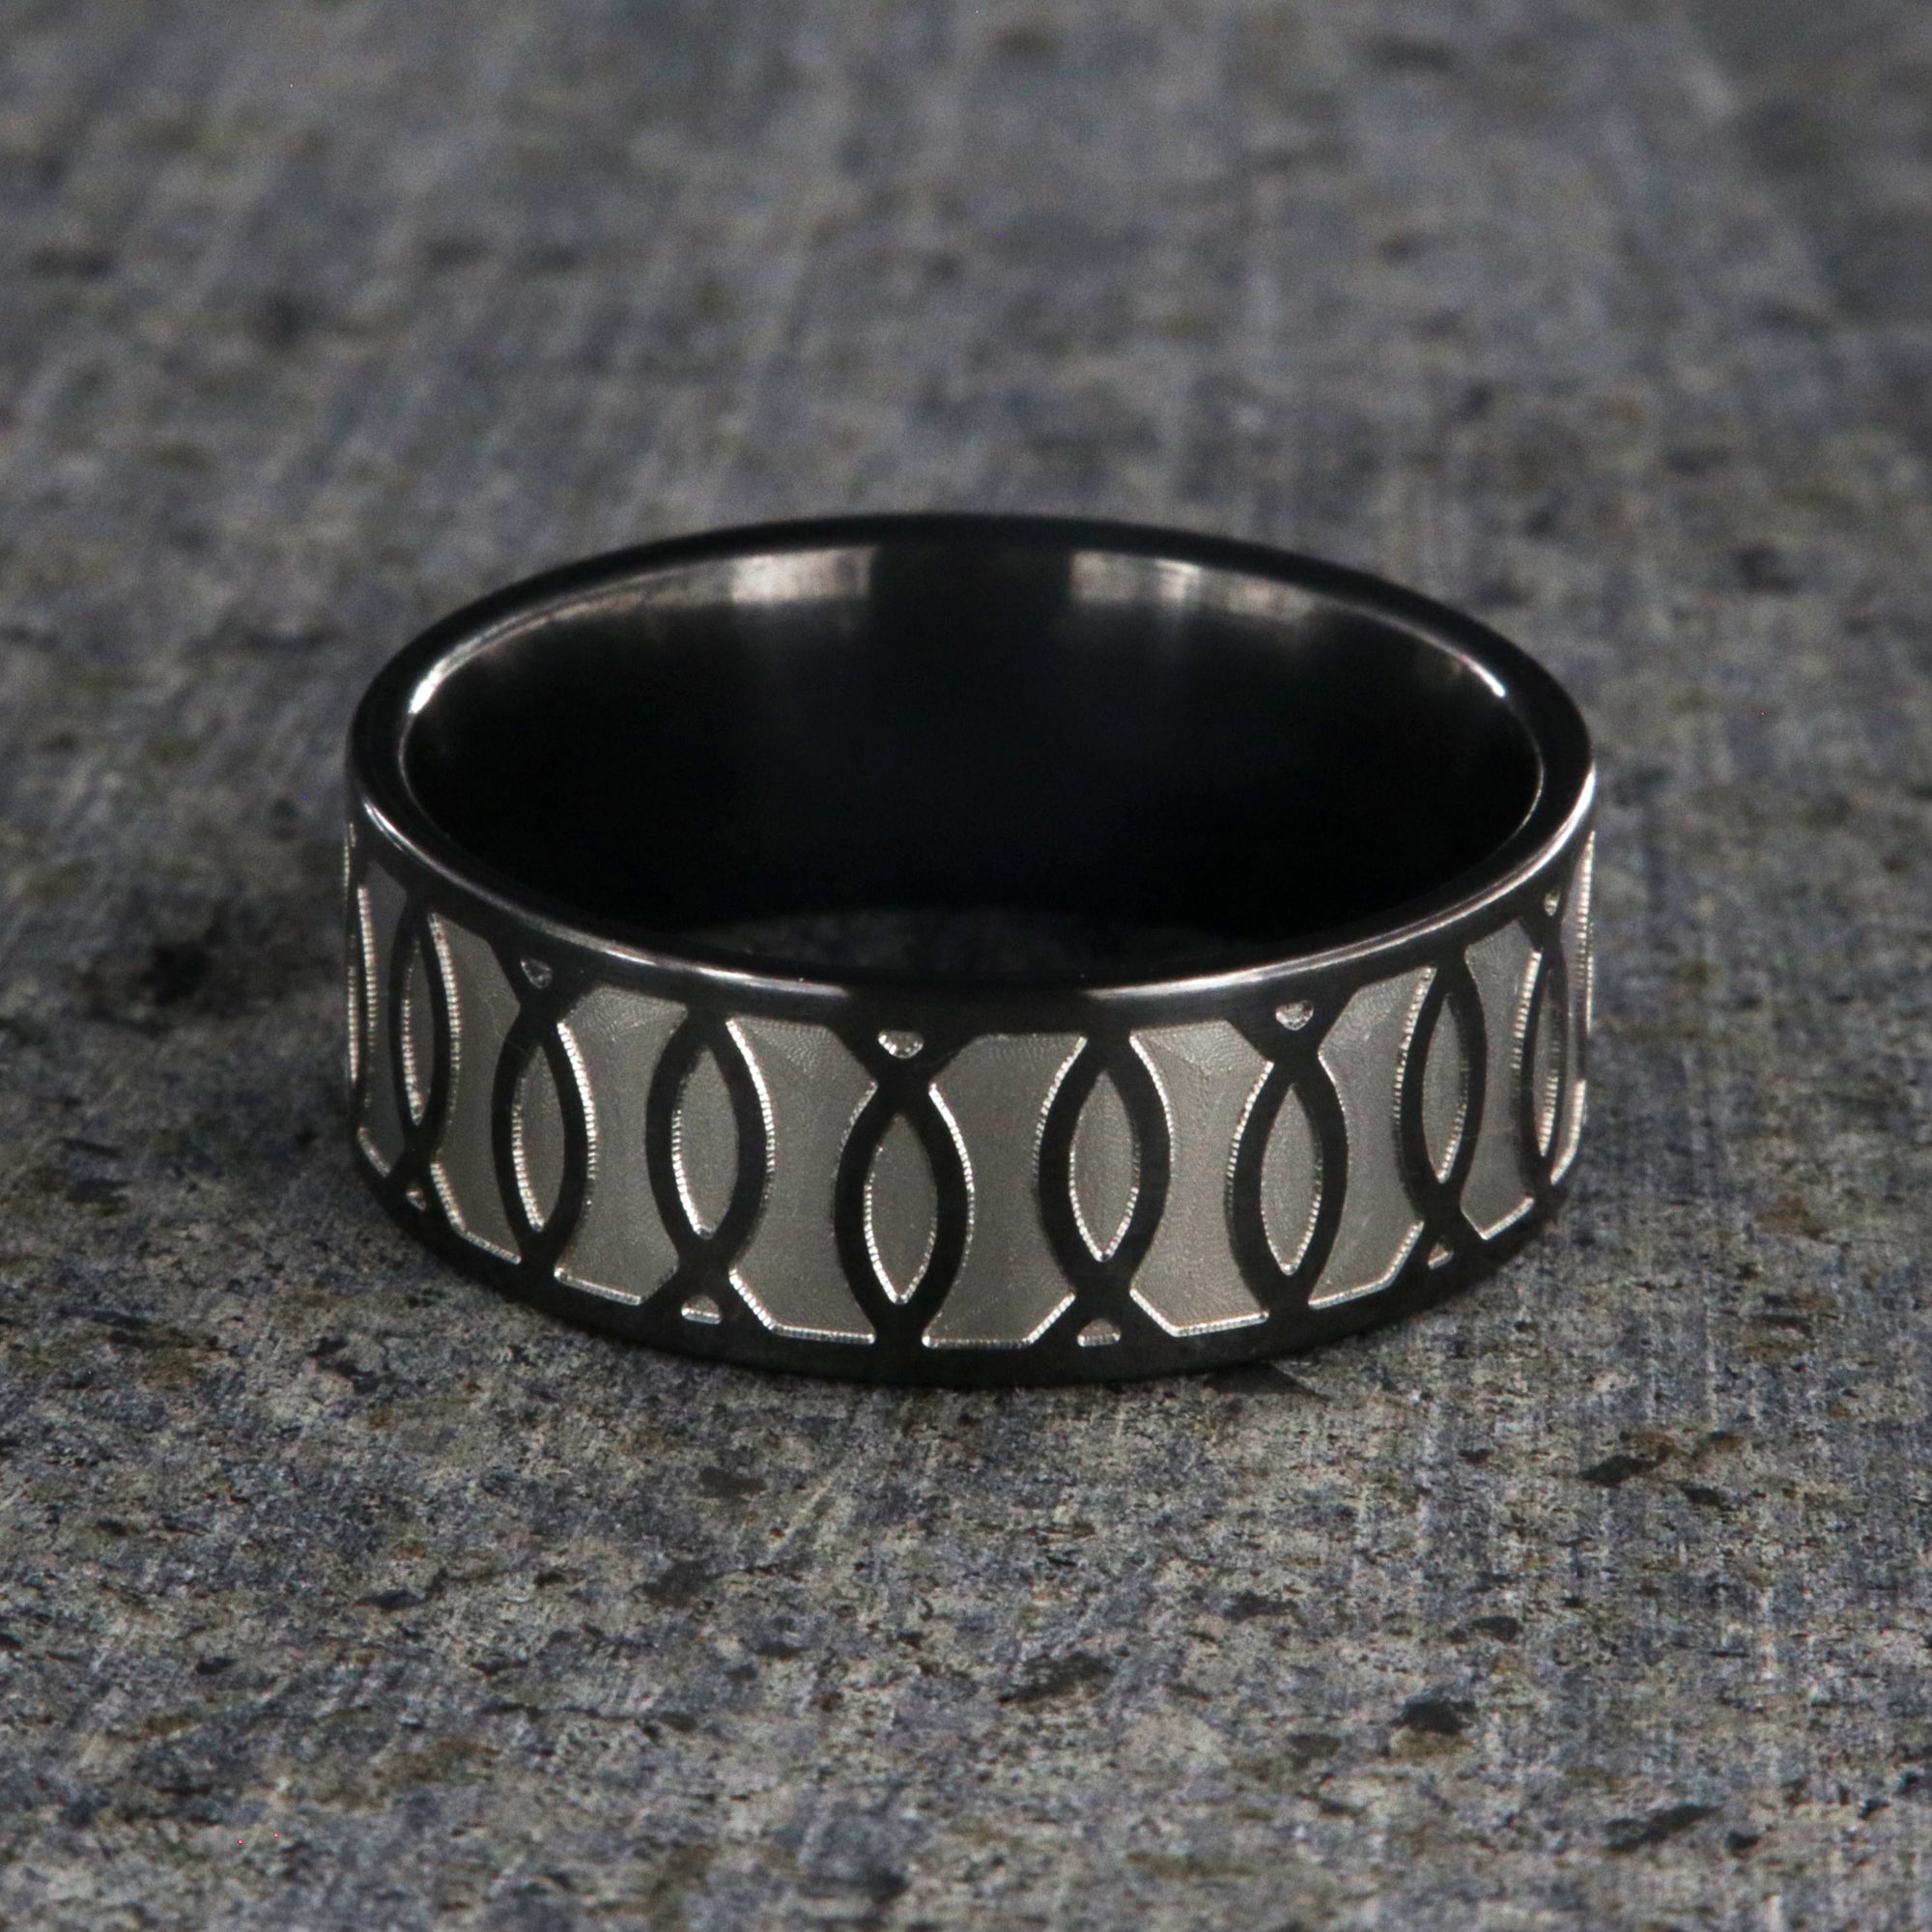 8mm wide black zirconium ring with a Jesus fish design